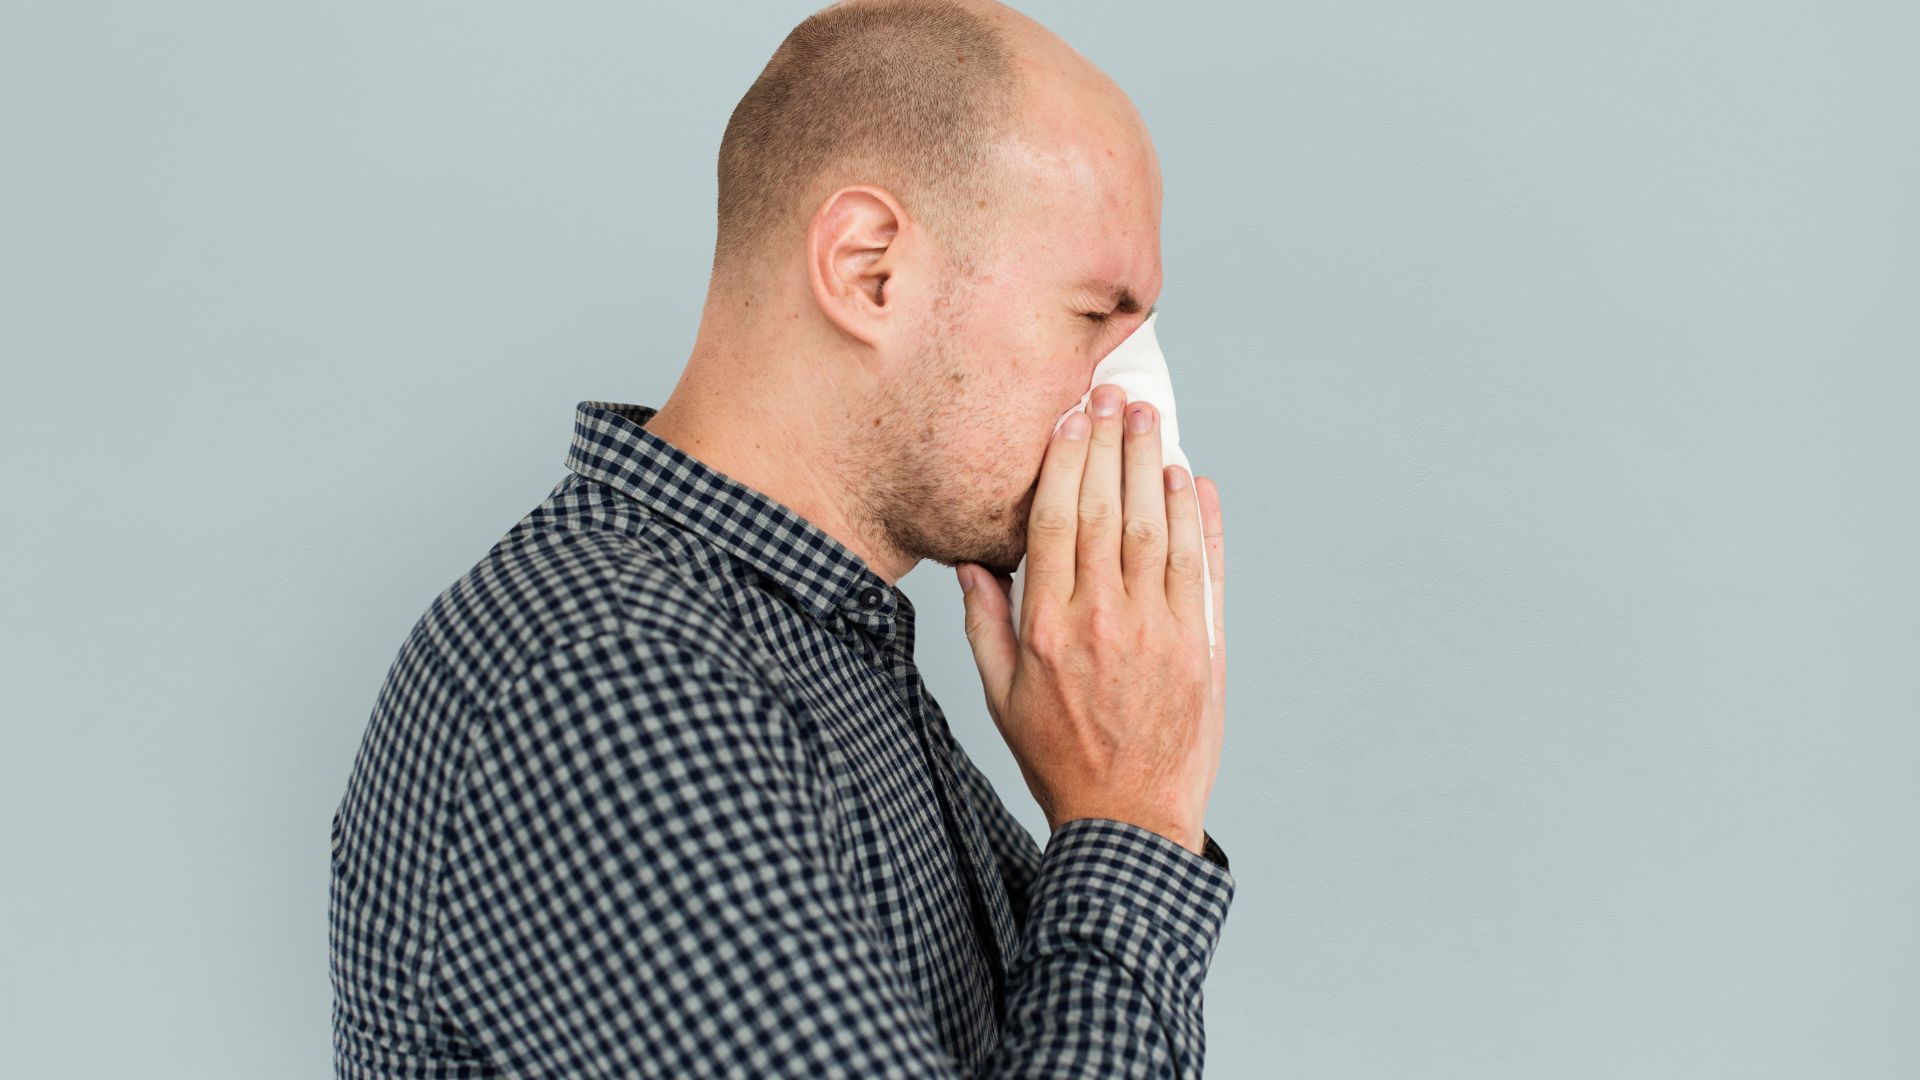 Gripe ou rinite? Saiba como diferenciar os sintomas